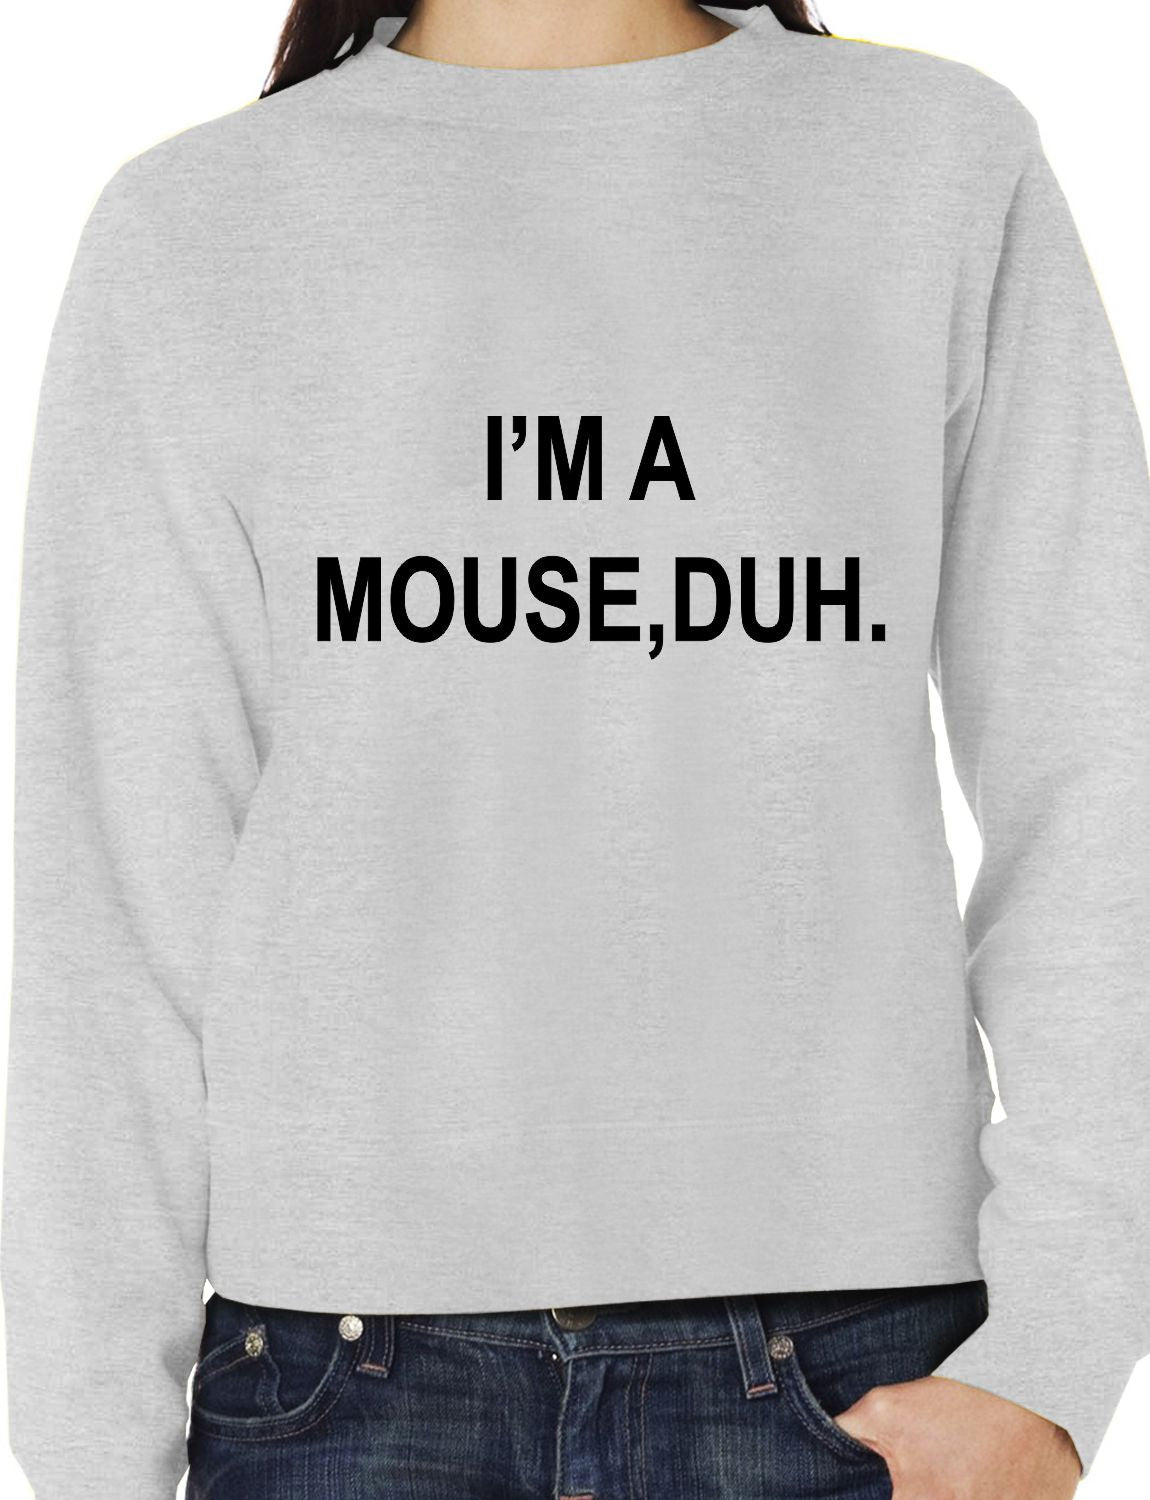 I'm A Mouse, Duh. T-shirt Unisex Sweatshirt